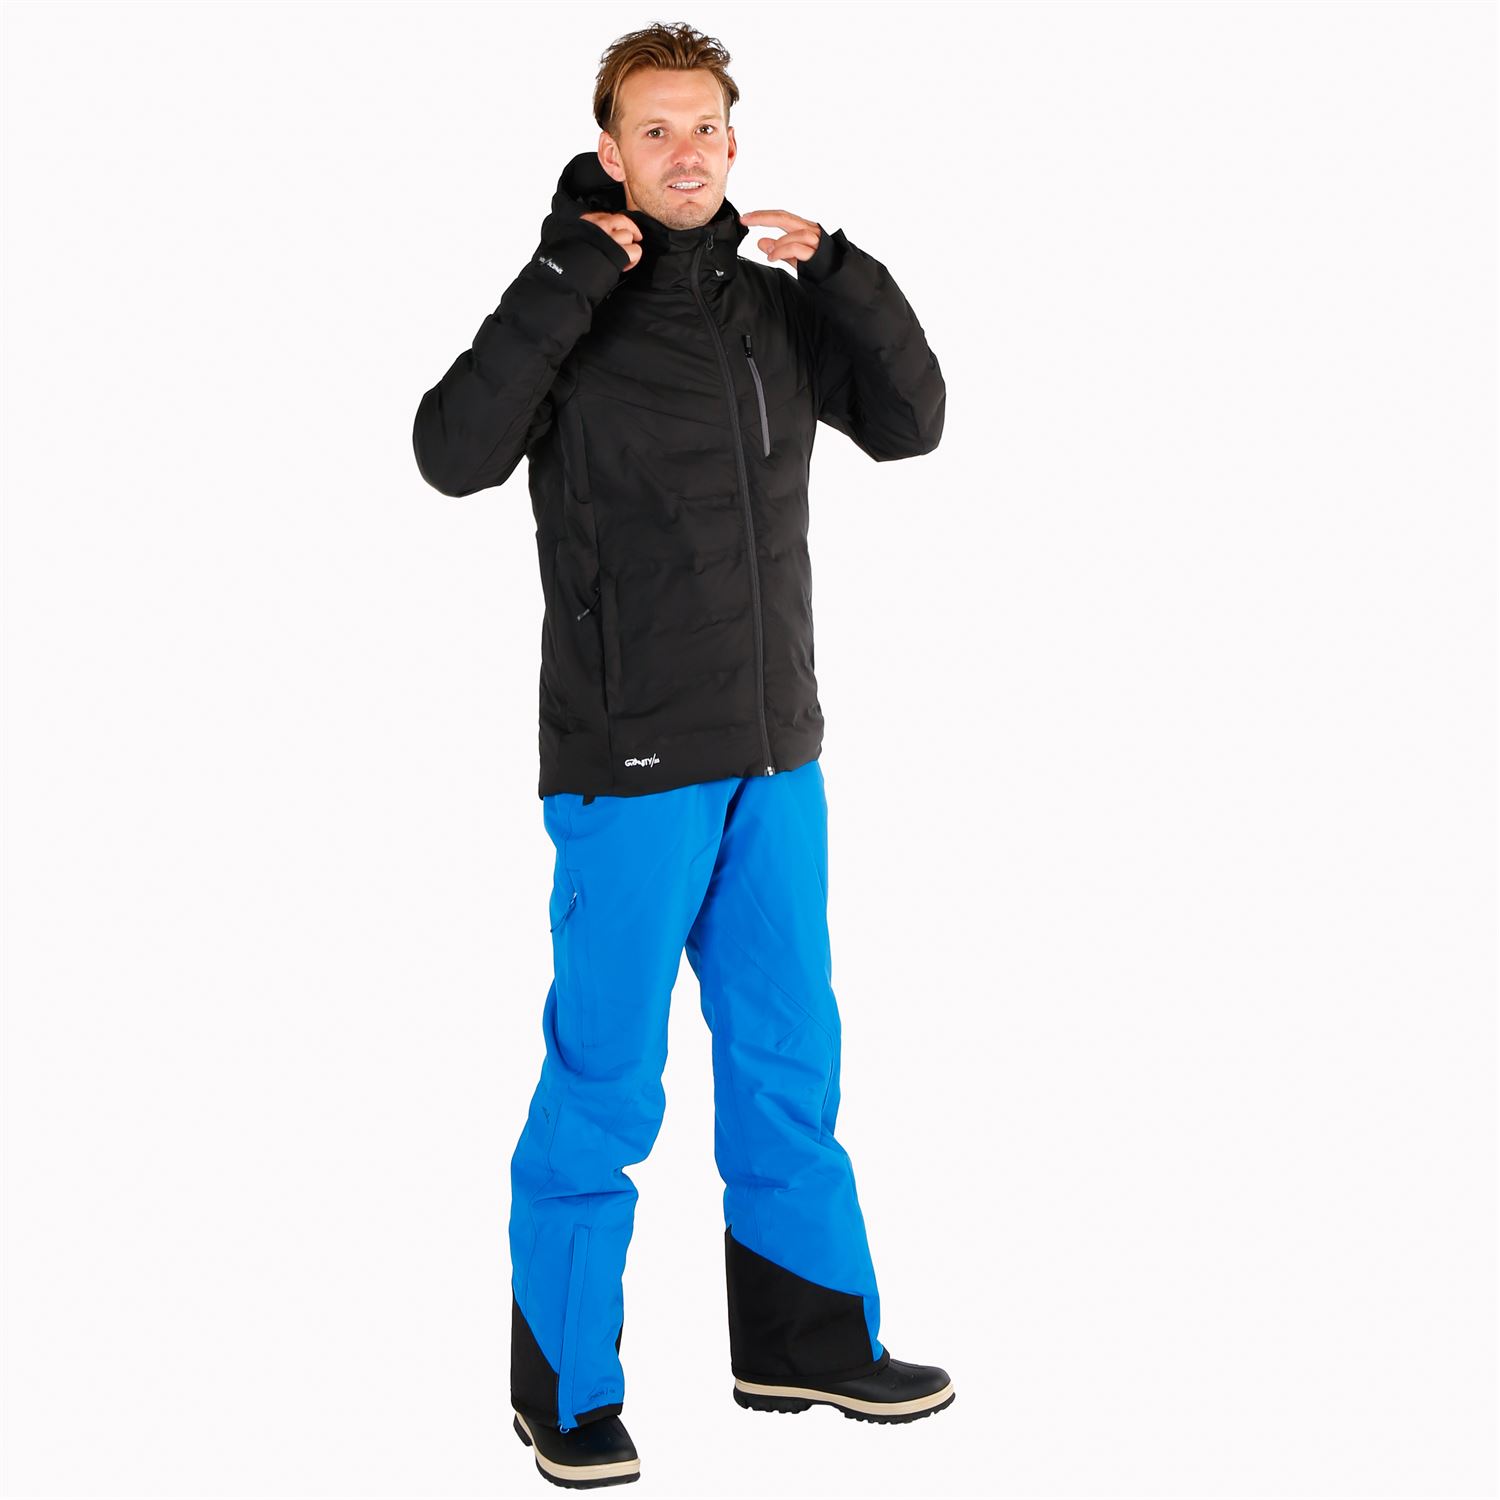 Details about   Brunotti ski snowboard pants trousers functional blau damiro 15k straps show original title